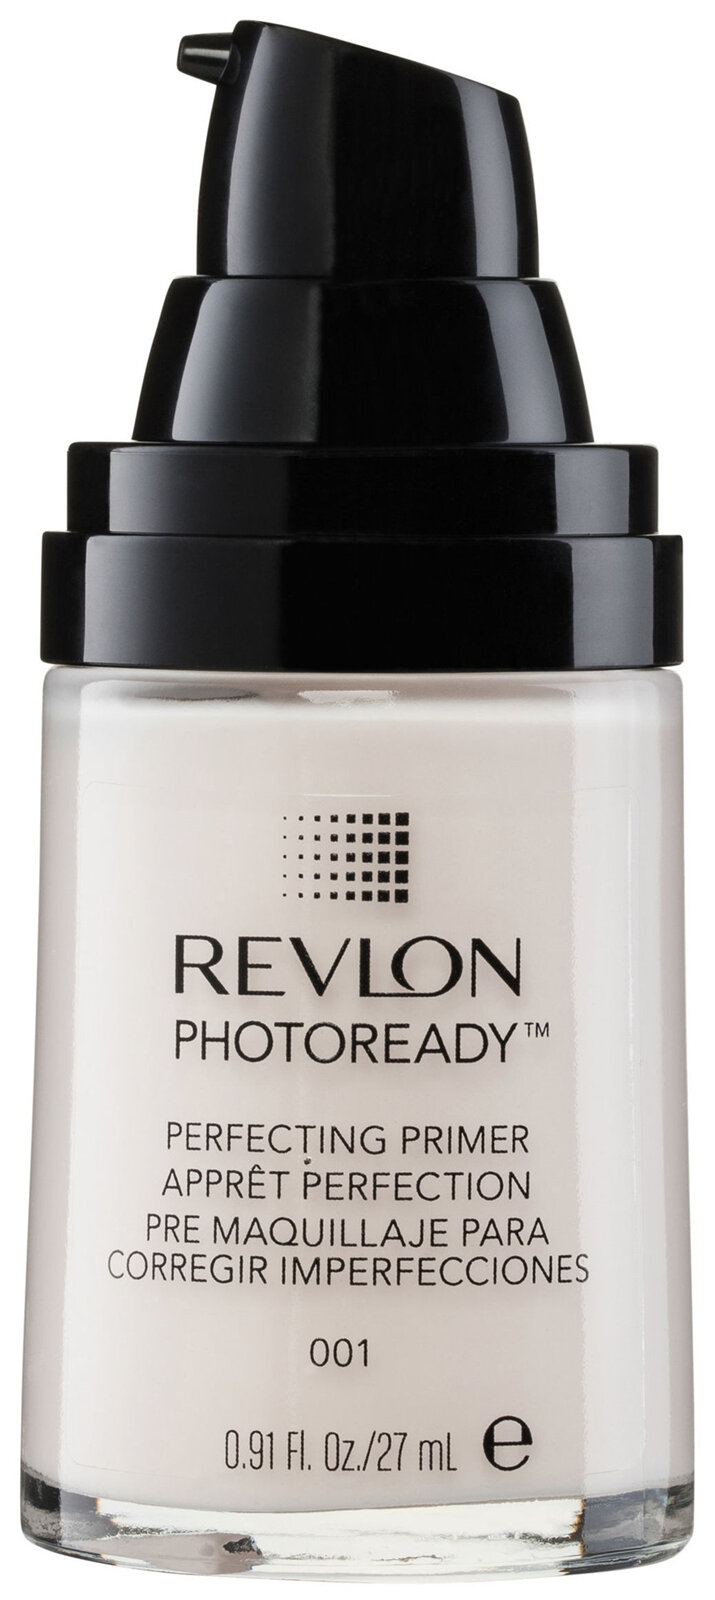 Revlon Photoready™ Perfecting Primer - Life Pharmacy Barrington Shop